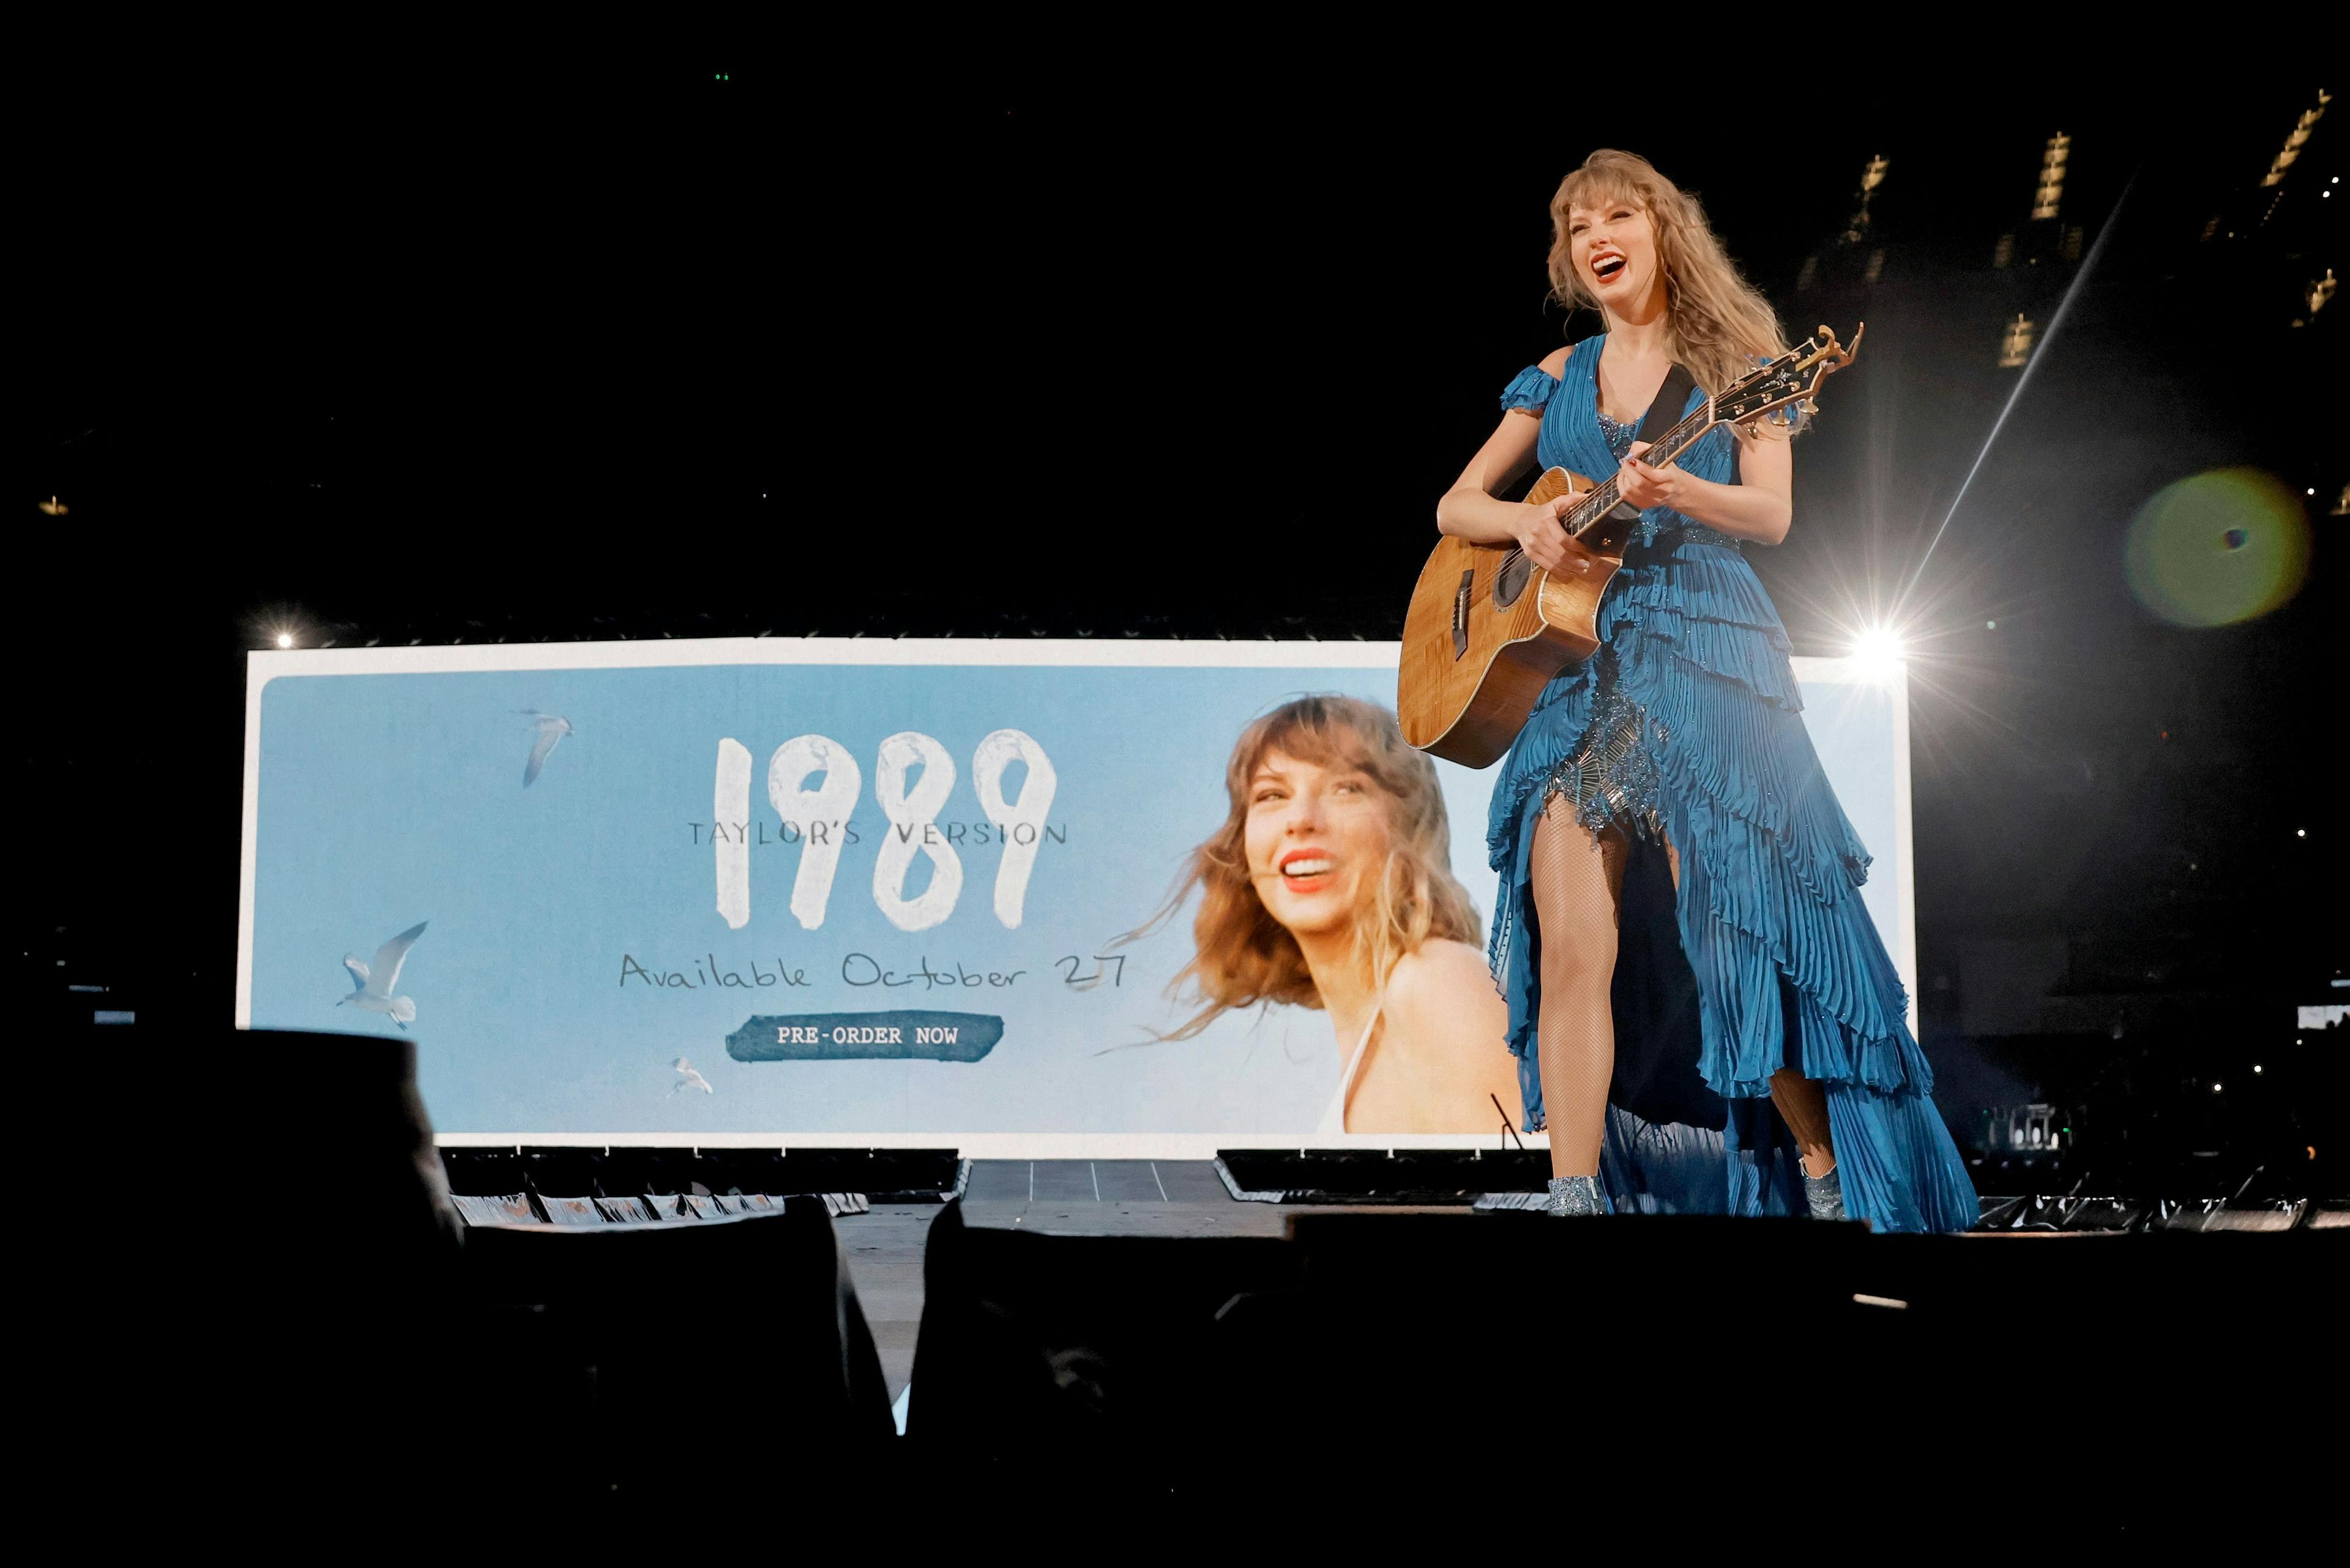 Taylor Swift '1989 (Taylor's Version)' blue outfits; Taylor Swift announces release of '1989 (Taylor's Version)' at final U.S. leg of the Eras Tour.